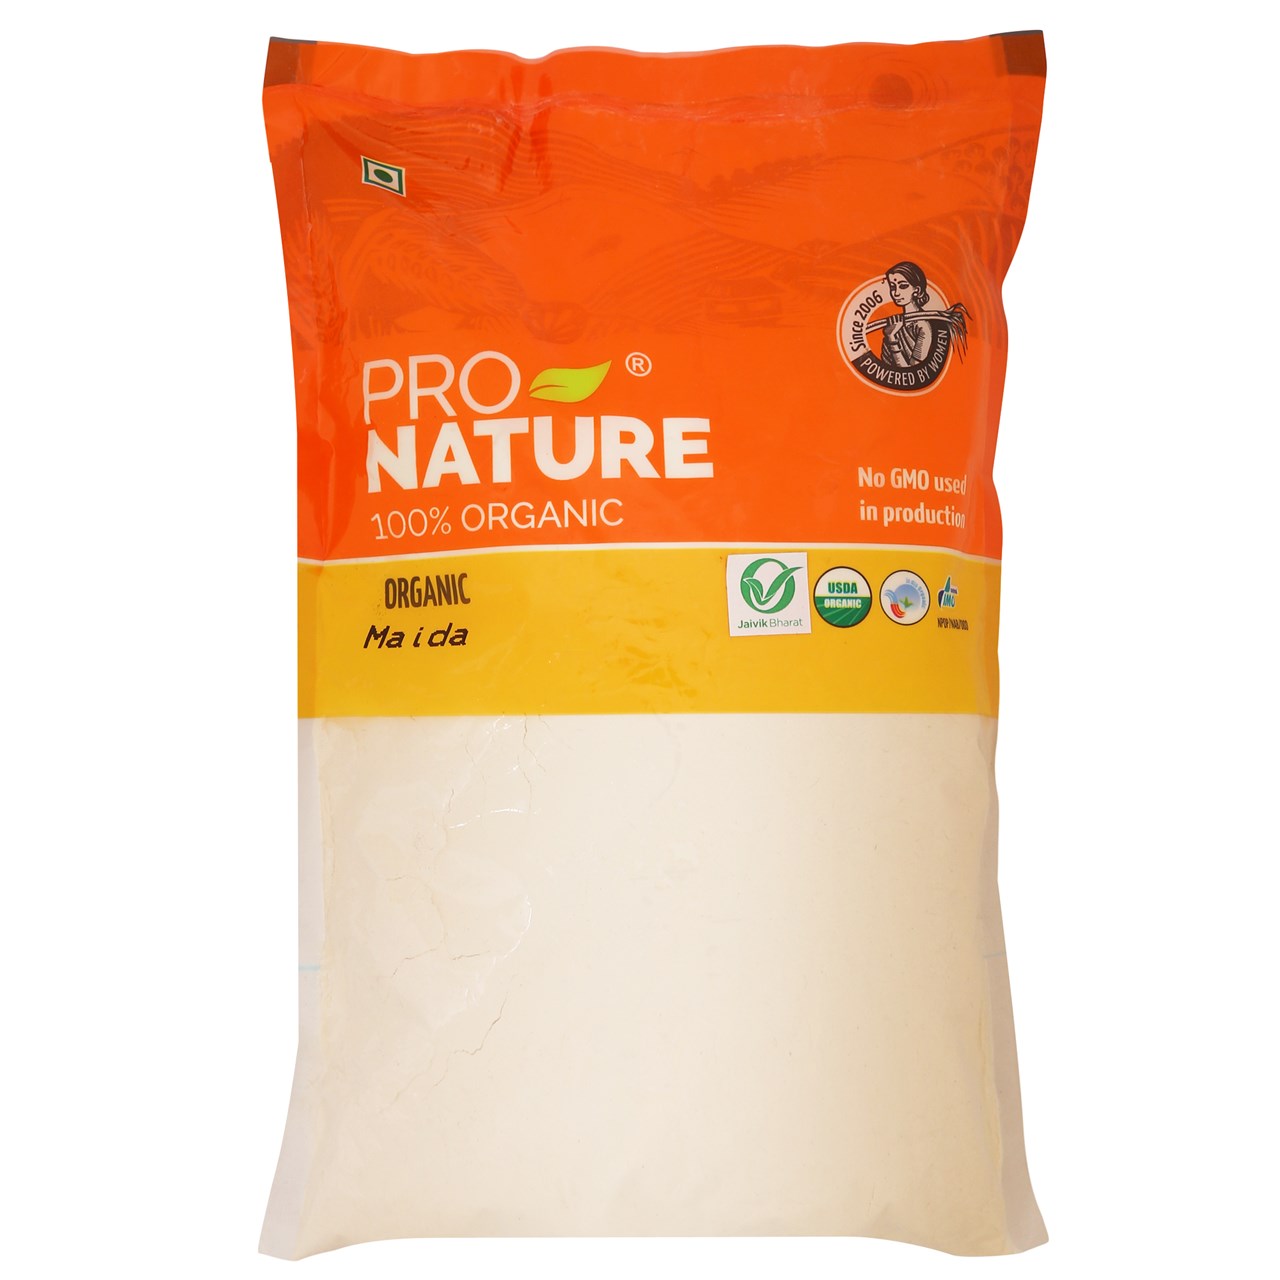 Picture of Pro Nature 100% Organic Flour (Maida) 500g